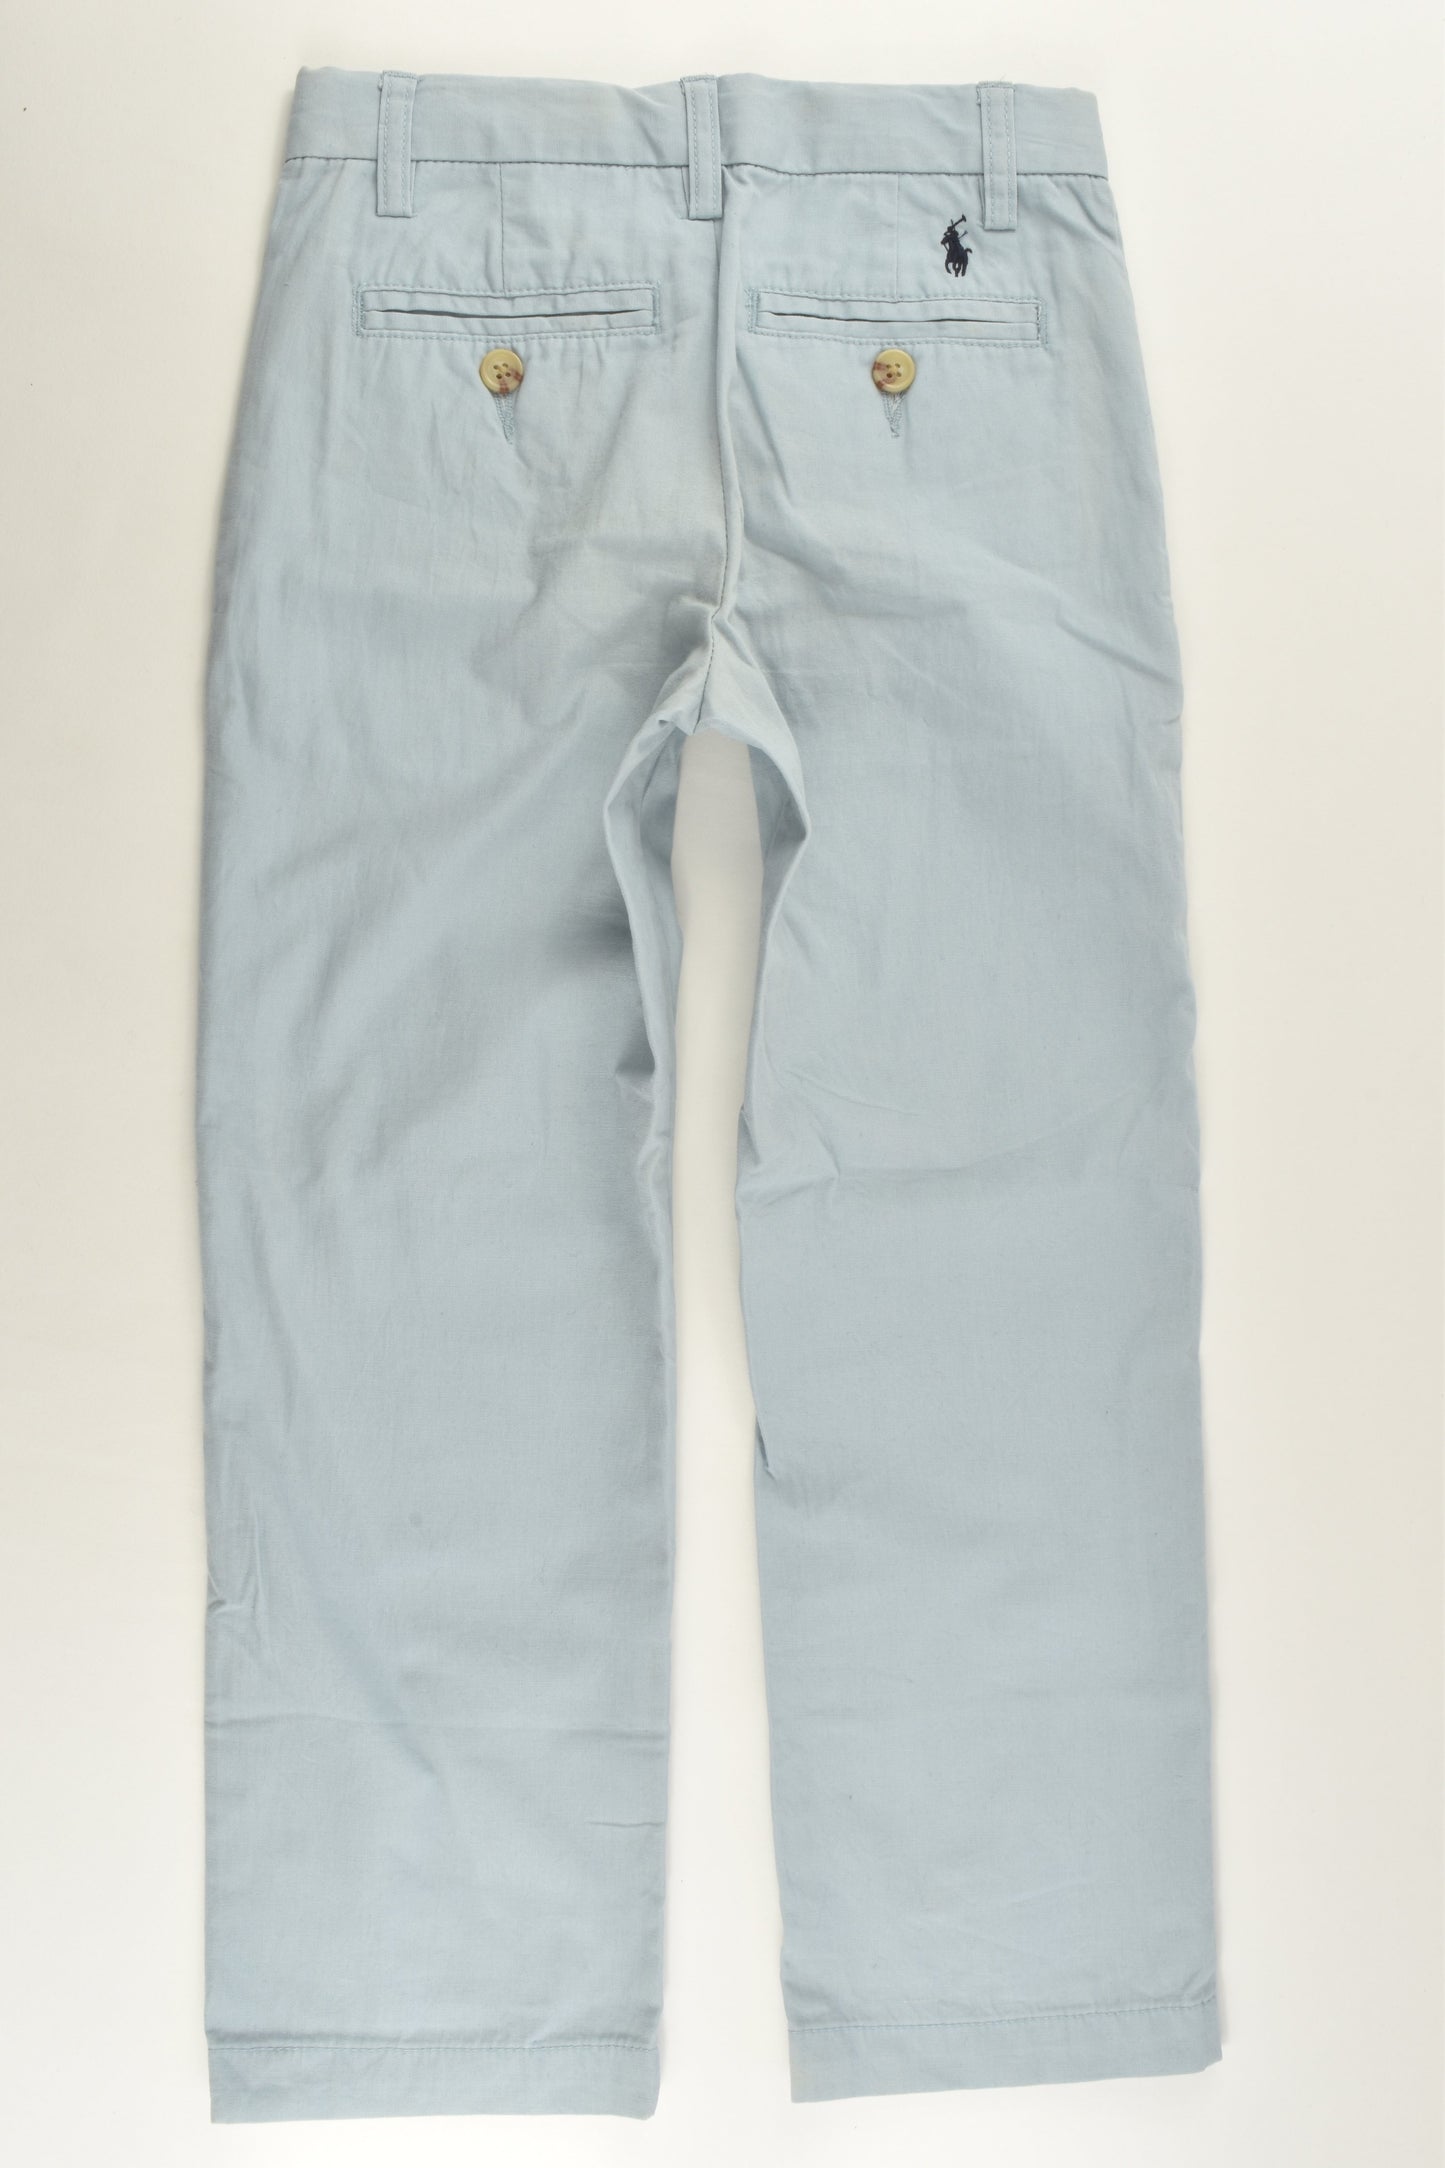 Polo by Ralph Lauren Size 5 Lightweight Pants